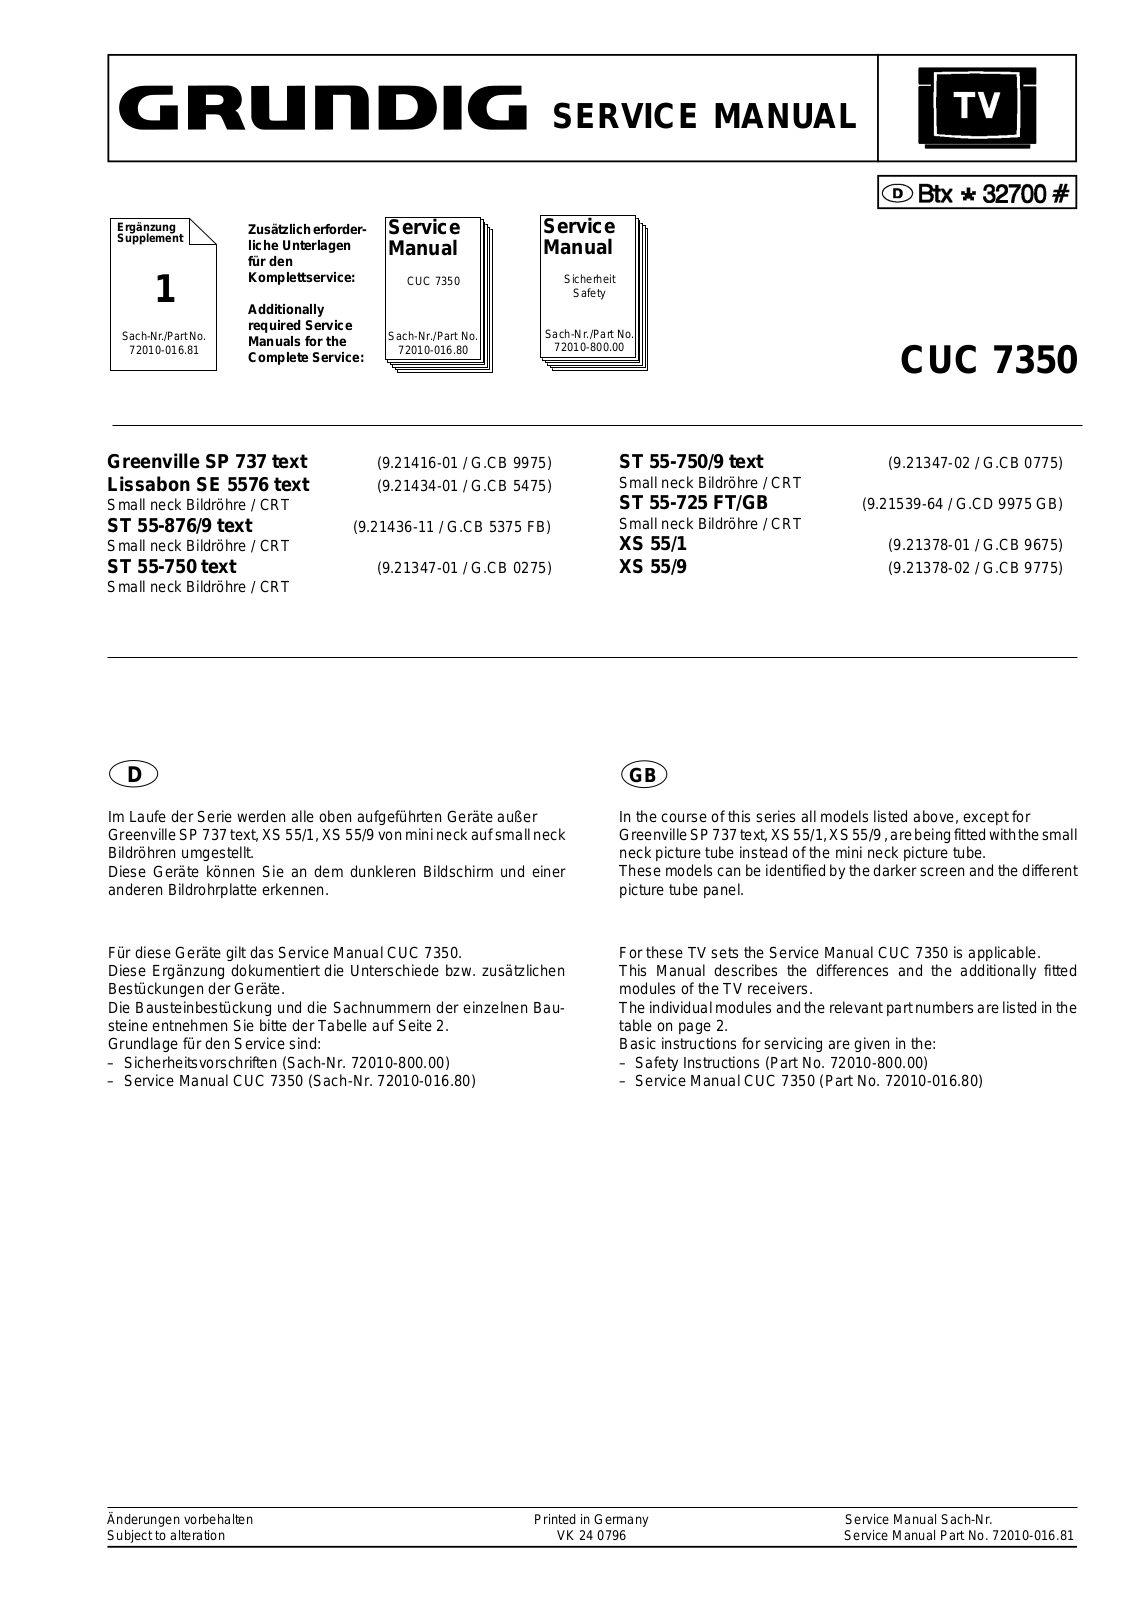 Grundig ST 55-750, ST 55-876-9, ST 55-725 FT-GB, Lissabon SE 5576, ST 55-750-9 Service Manual